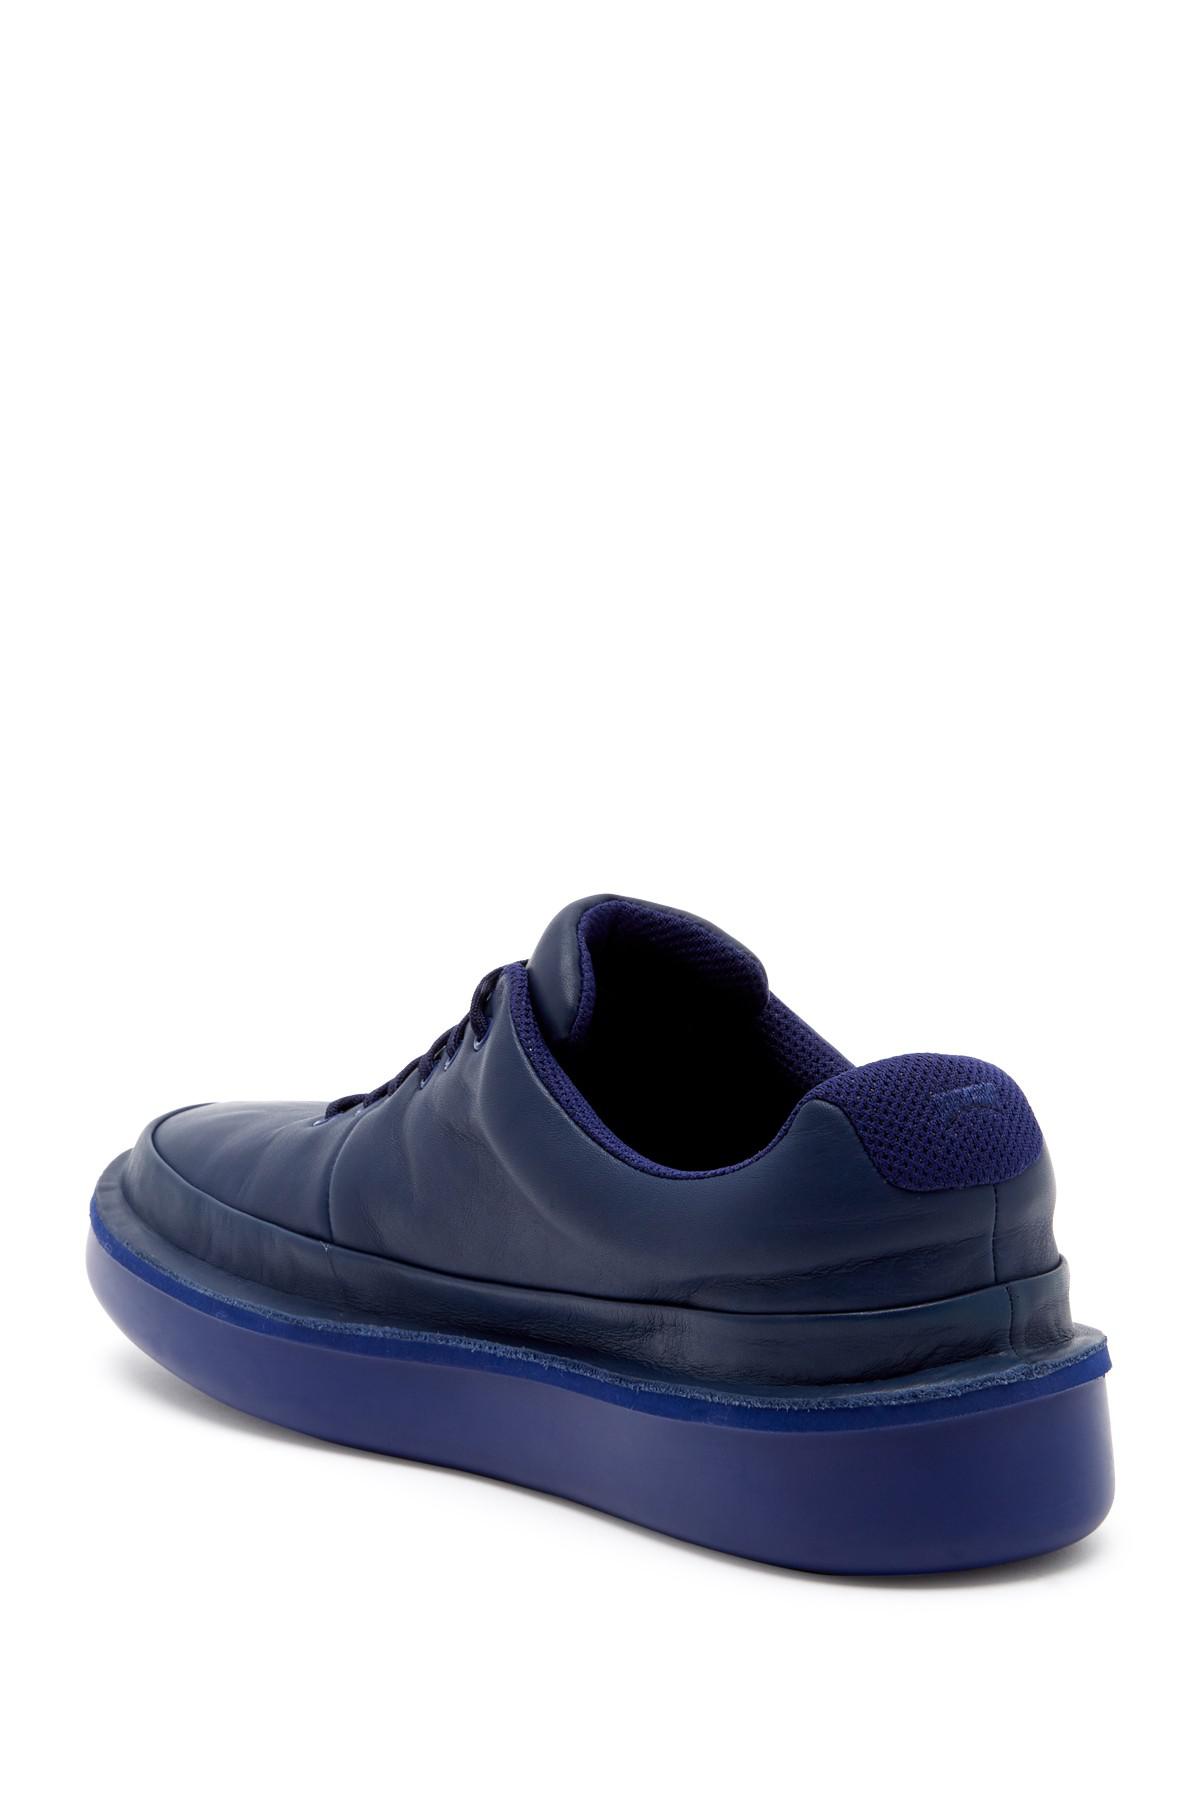 Camper Leather Gorka Extra Light Sneaker in Navy (Blue) for Men | Lyst